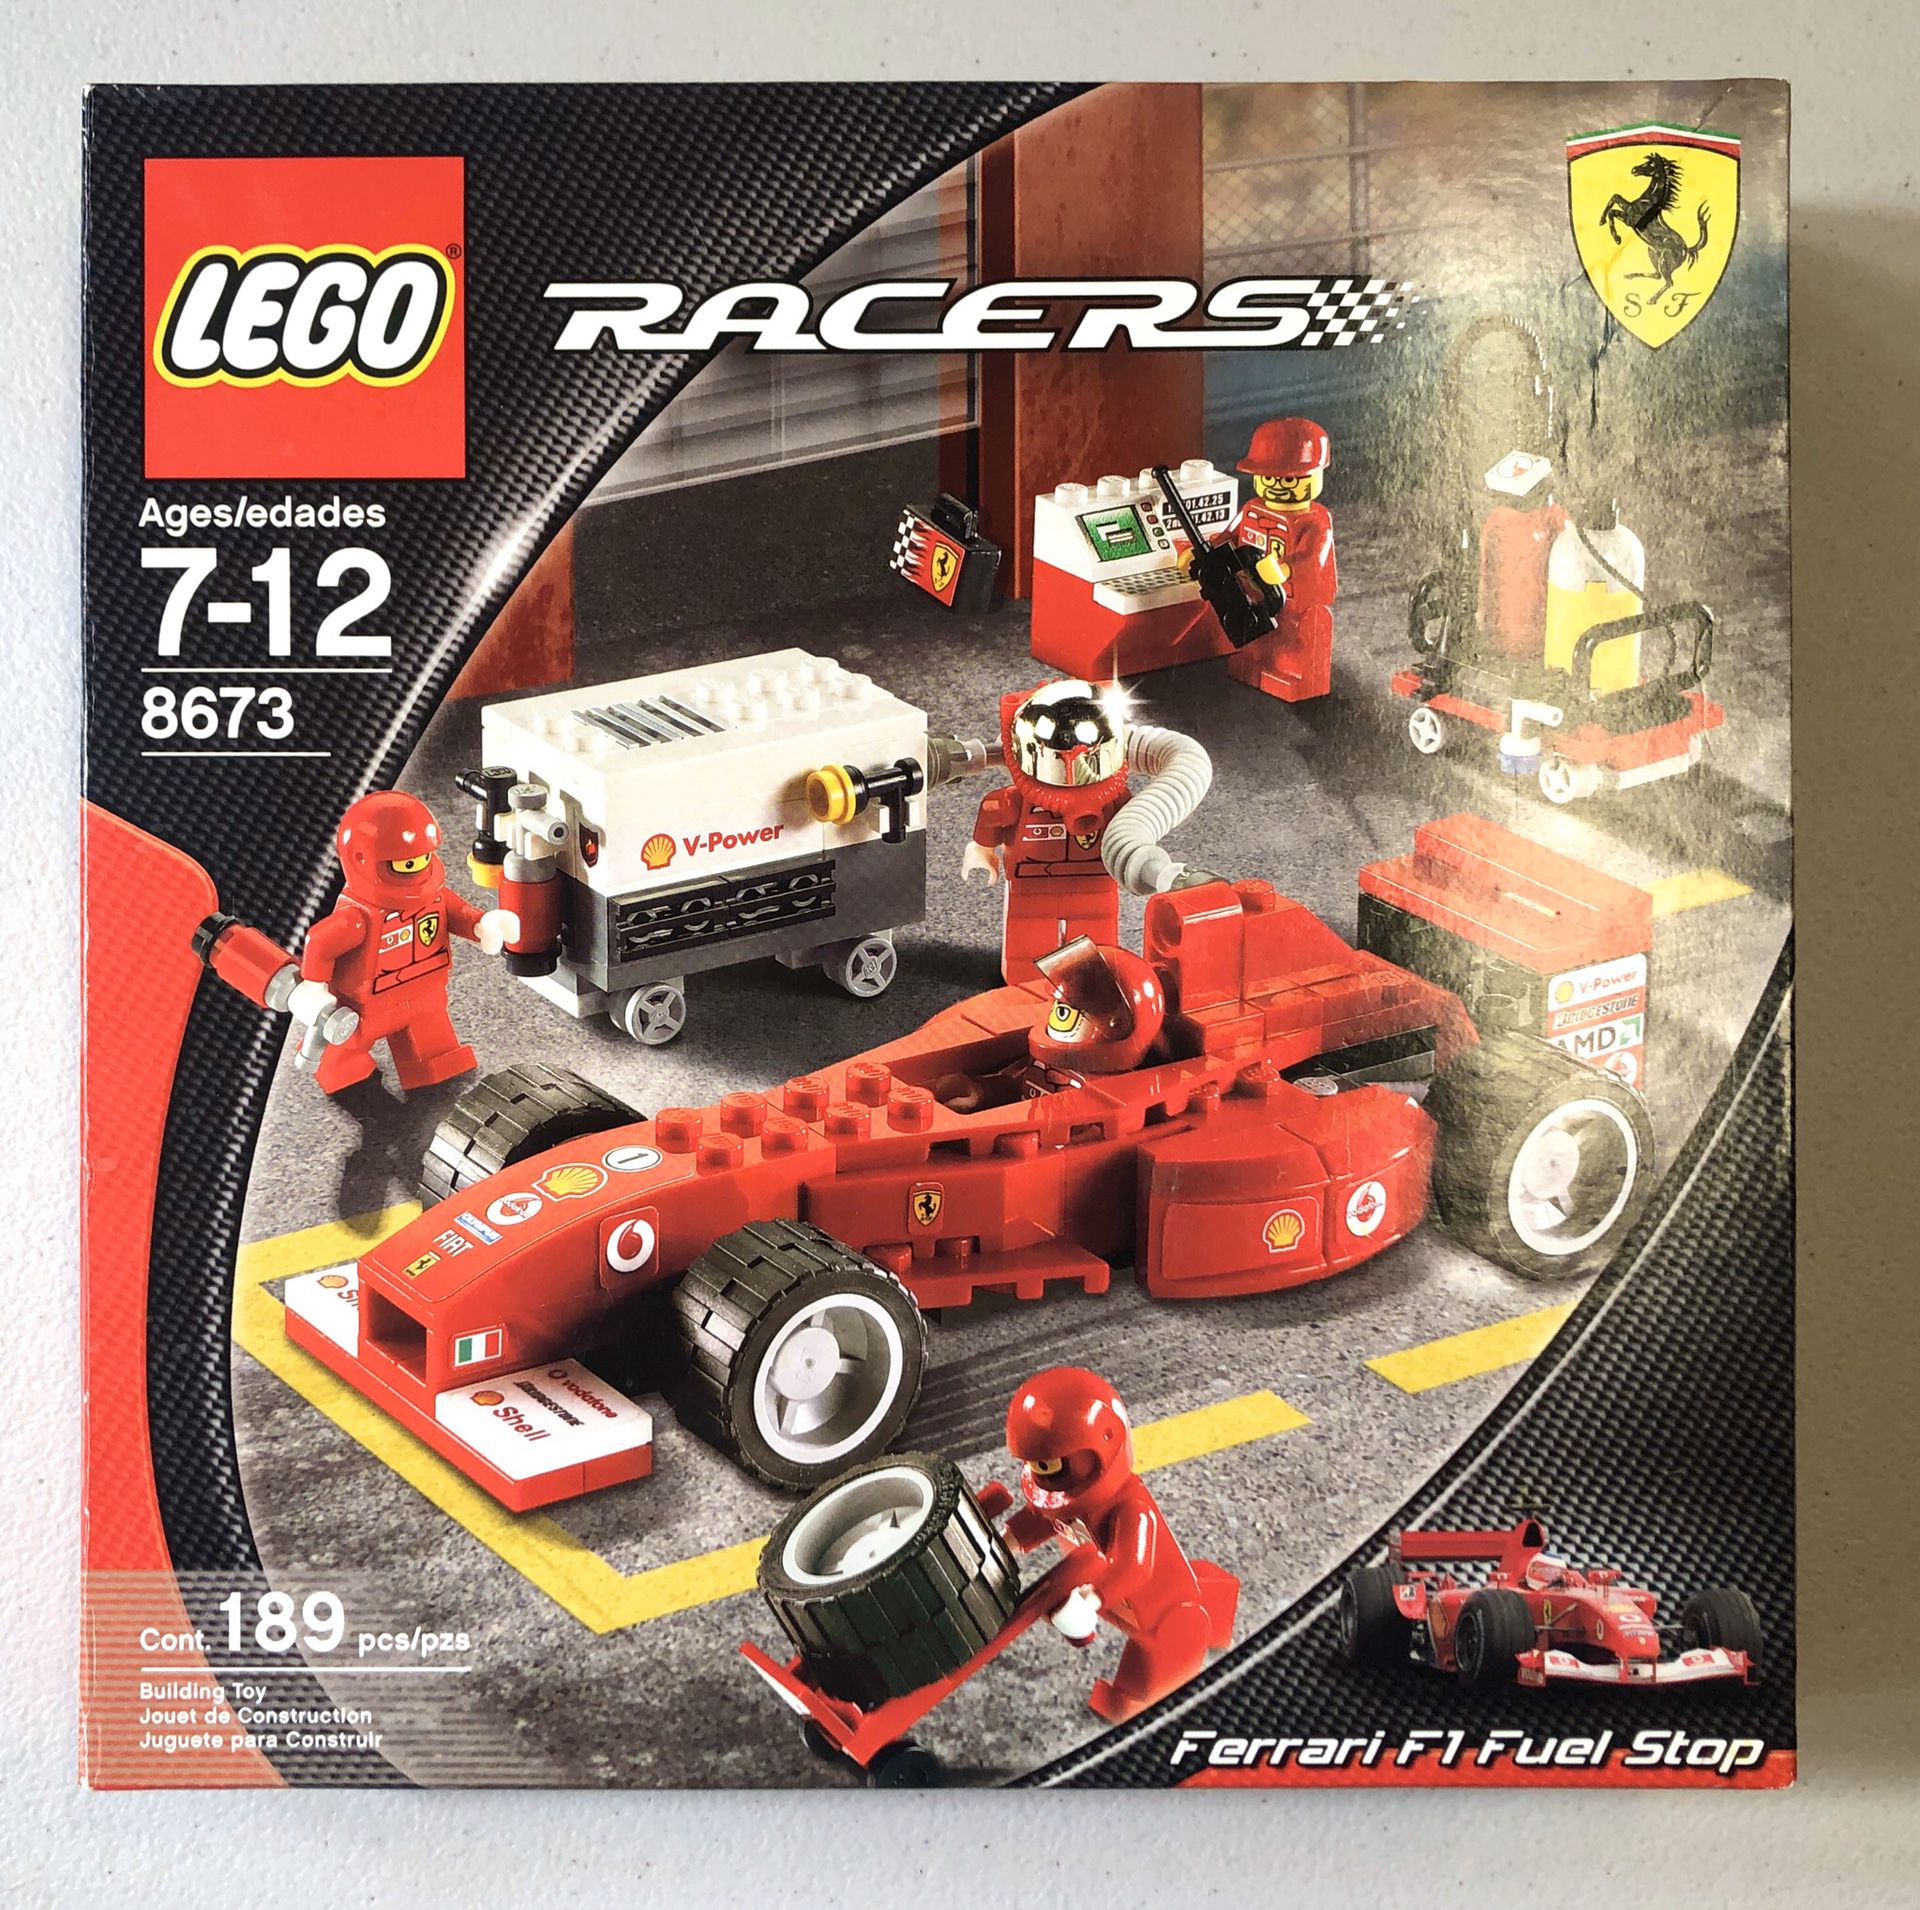 Lego Ferrari F1 Fuel Stop - Complete